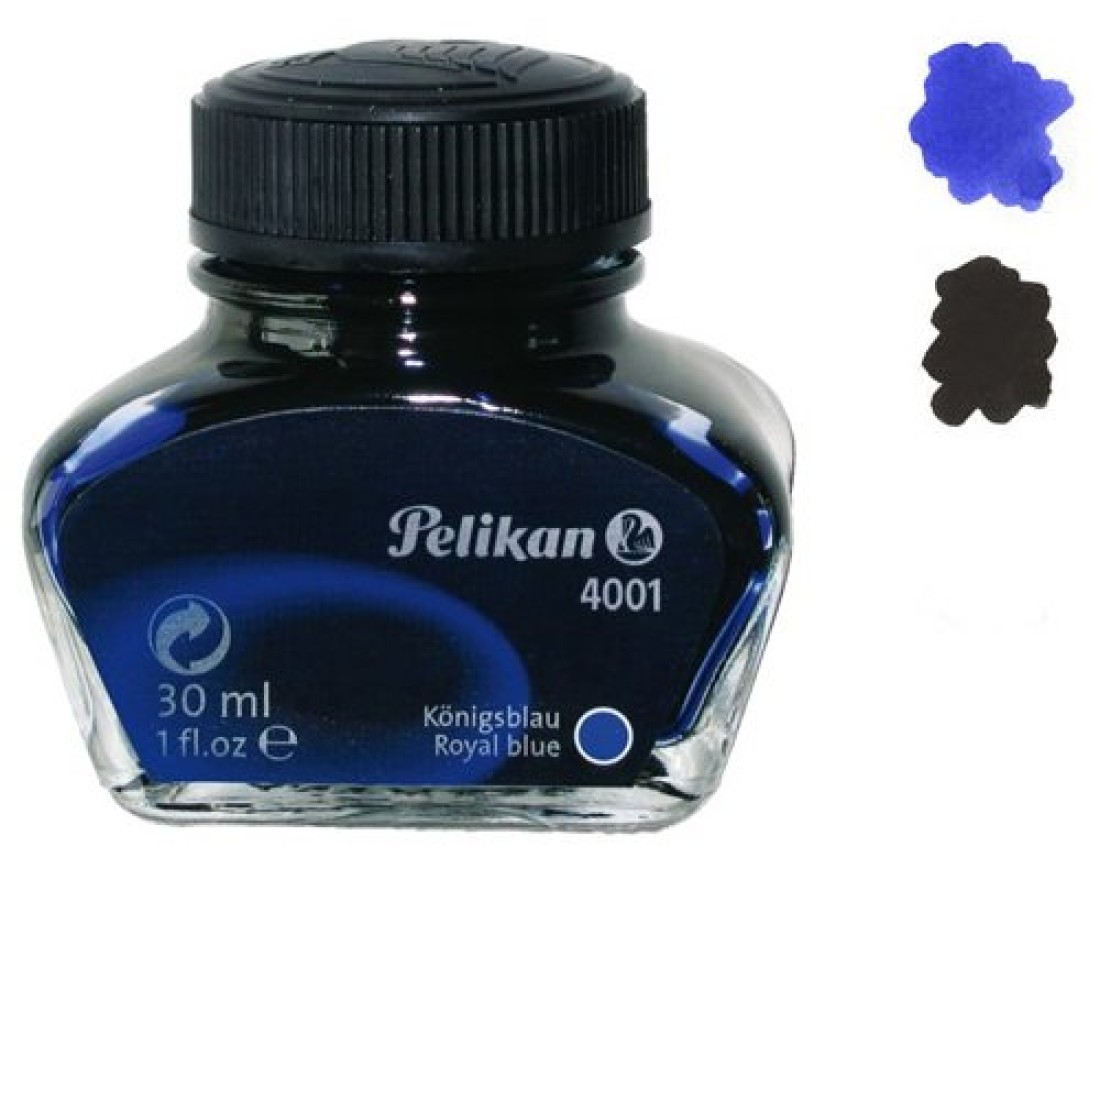 Pelikan Ink - Ink Bottle (9 colors)